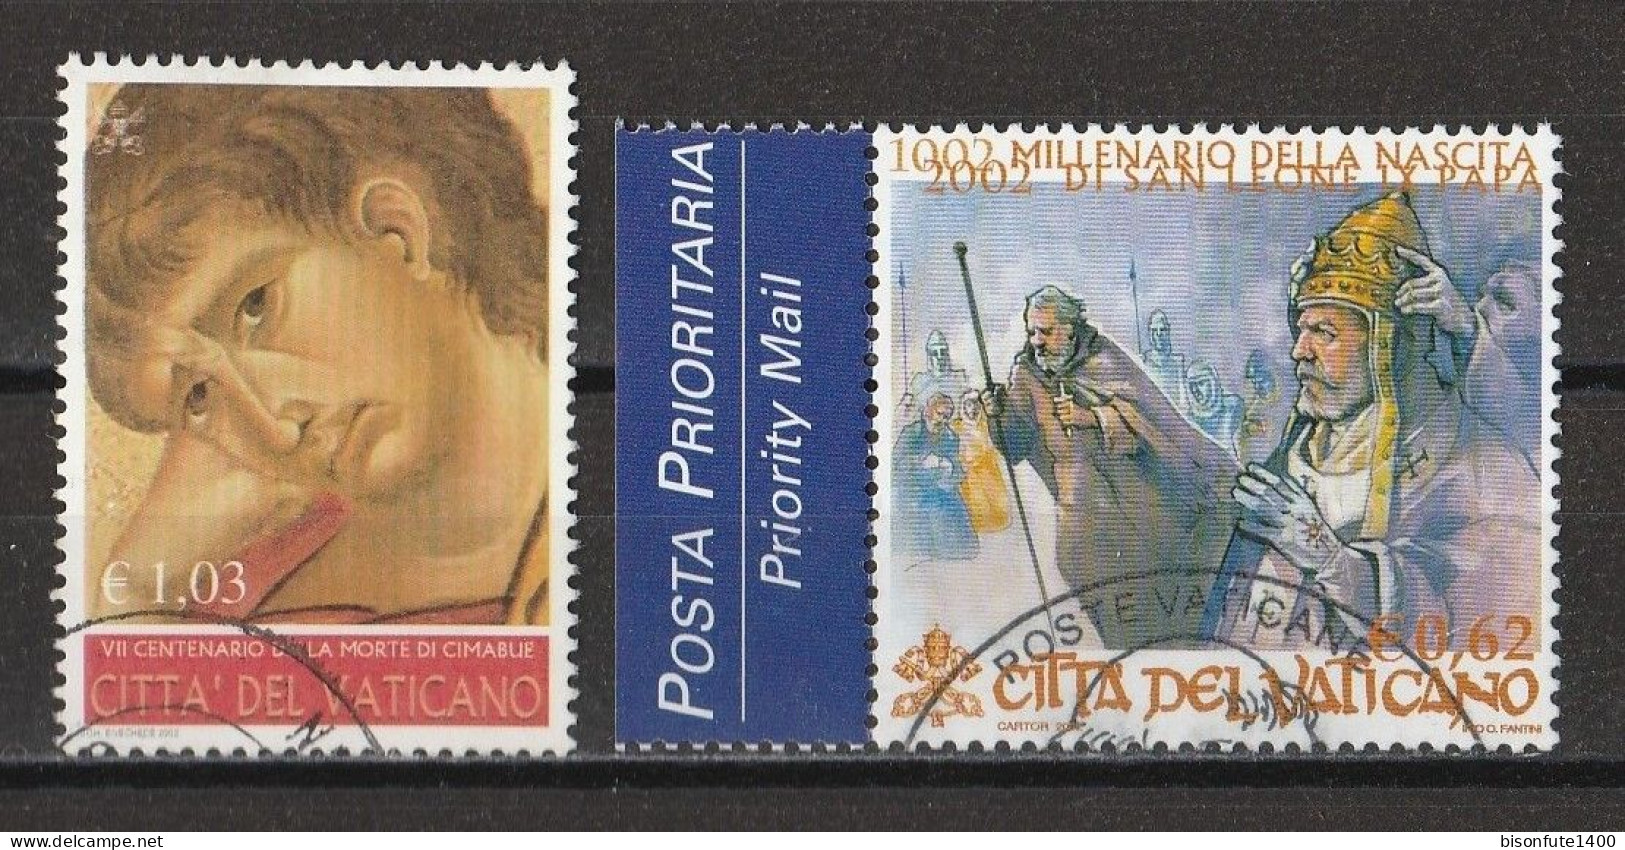 Vatican 2002 : Timbres Yvert & Tellier N° 1266 - 1268 - 1270 - 1275 Et 1277 Oblitérés. - Usati